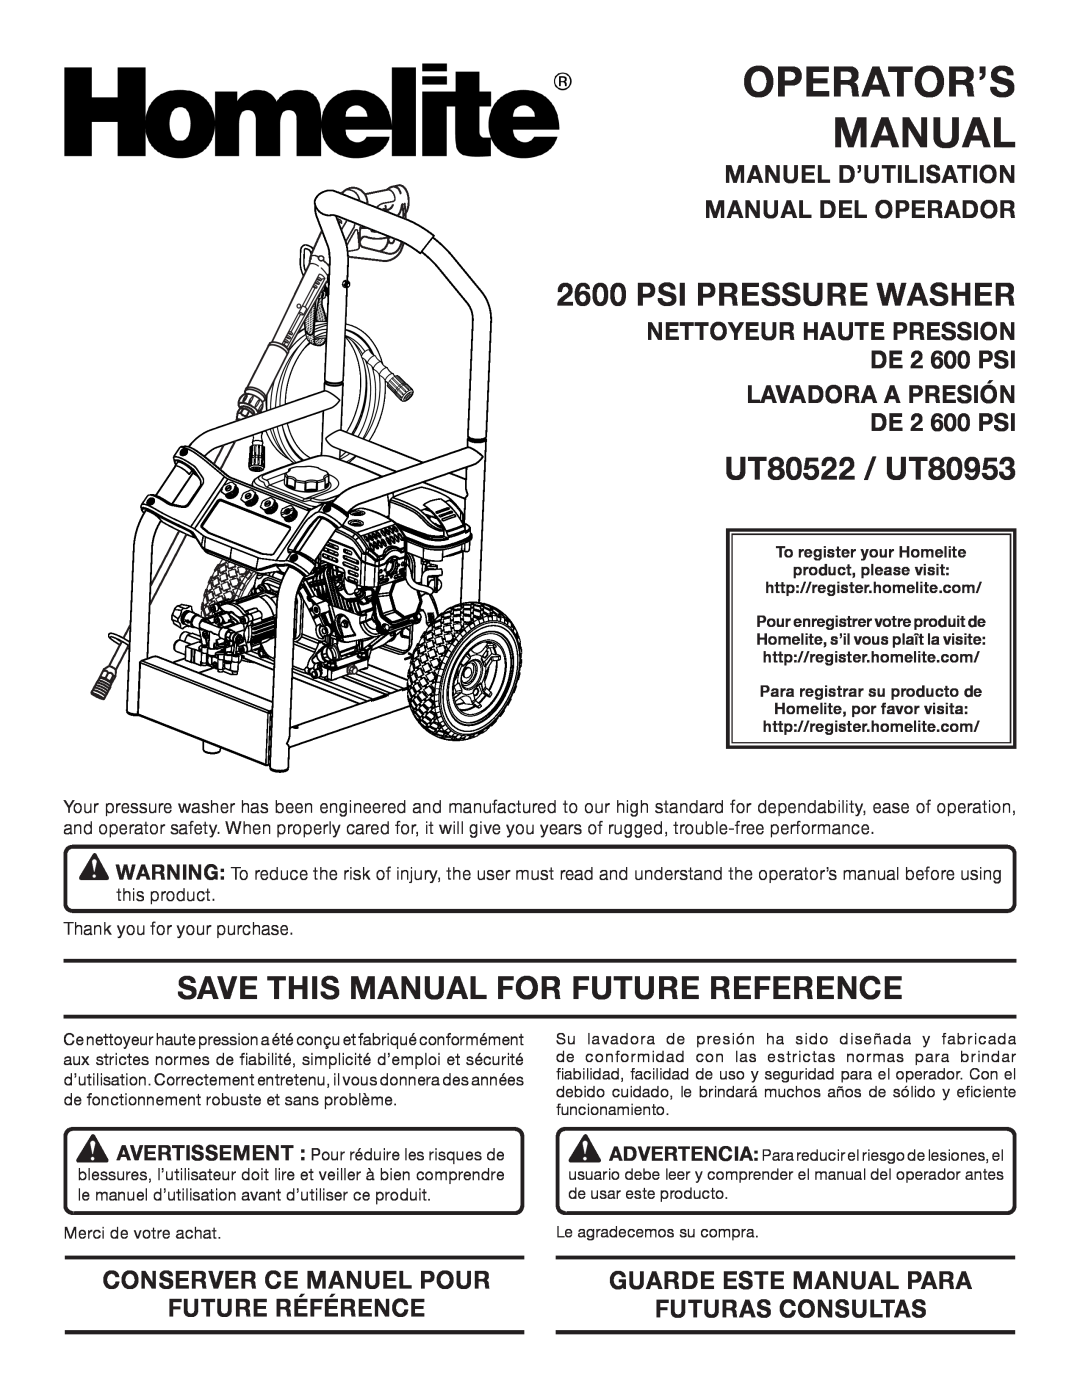 Homelite manuel dutilisation Psi Pressure Washer, UT80522 / UT80953, Save This Manual For Future Reference 